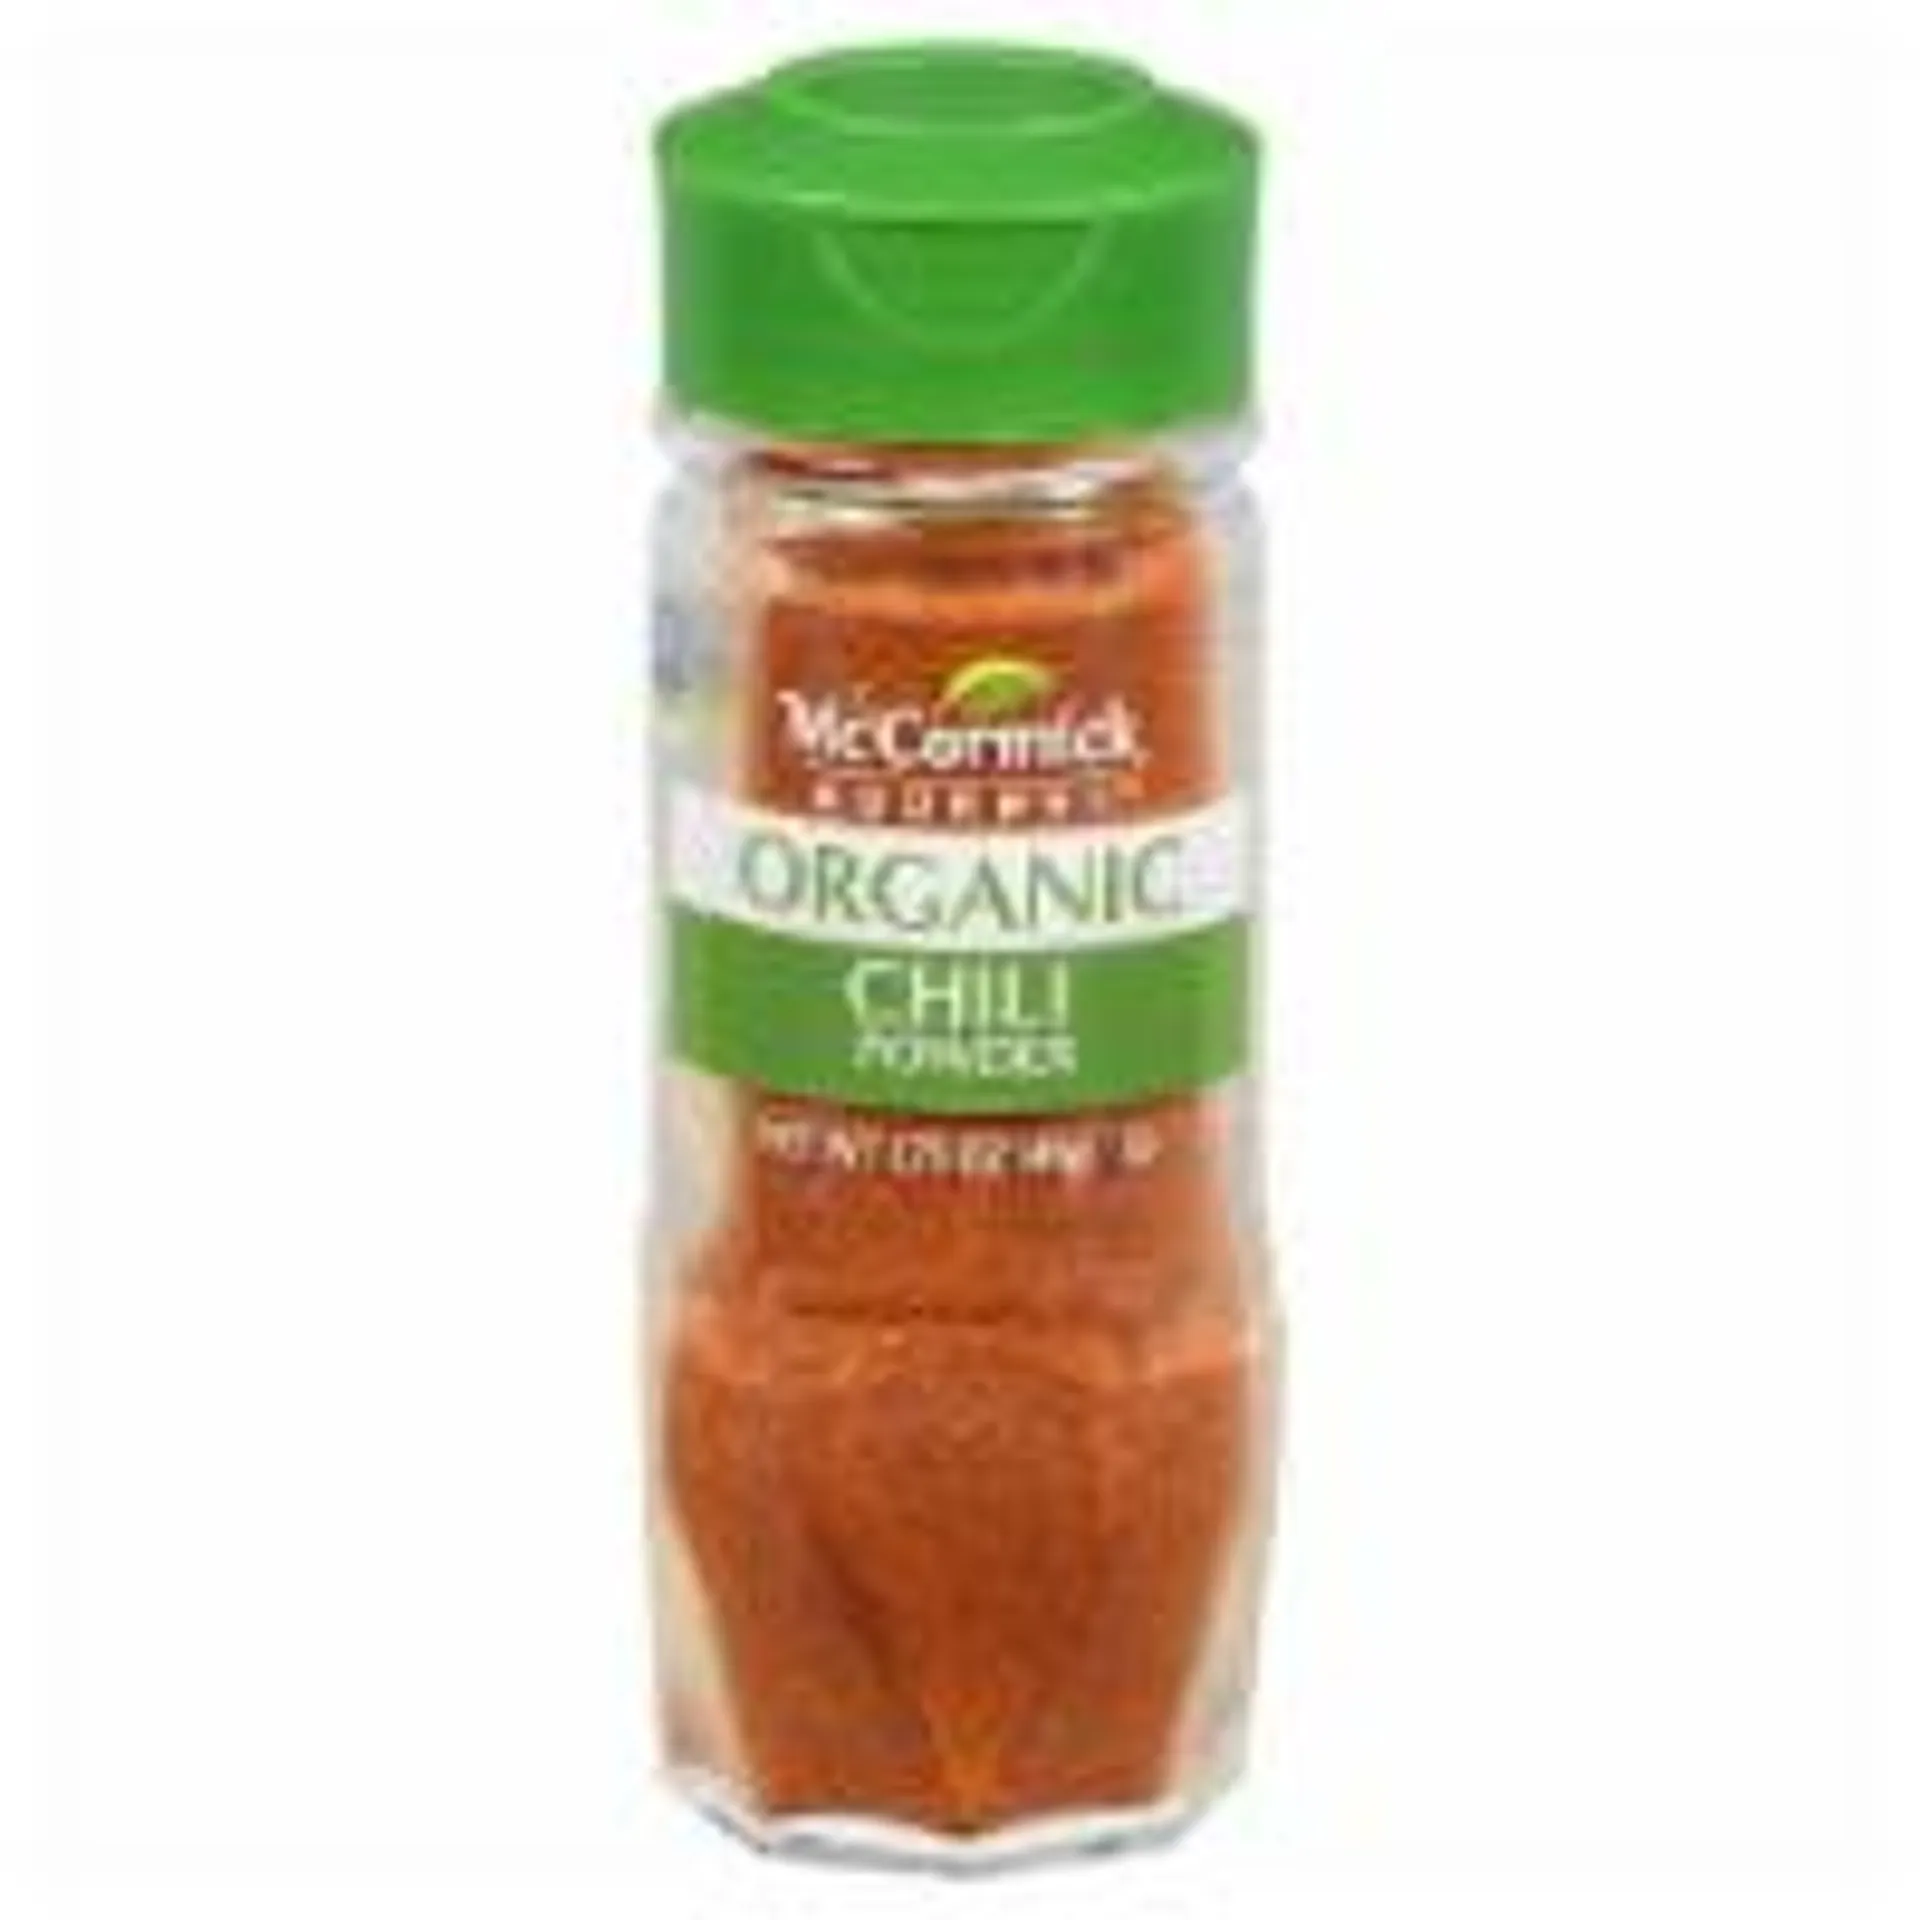 McCormick® Gourmet™ Organic Chili Powder